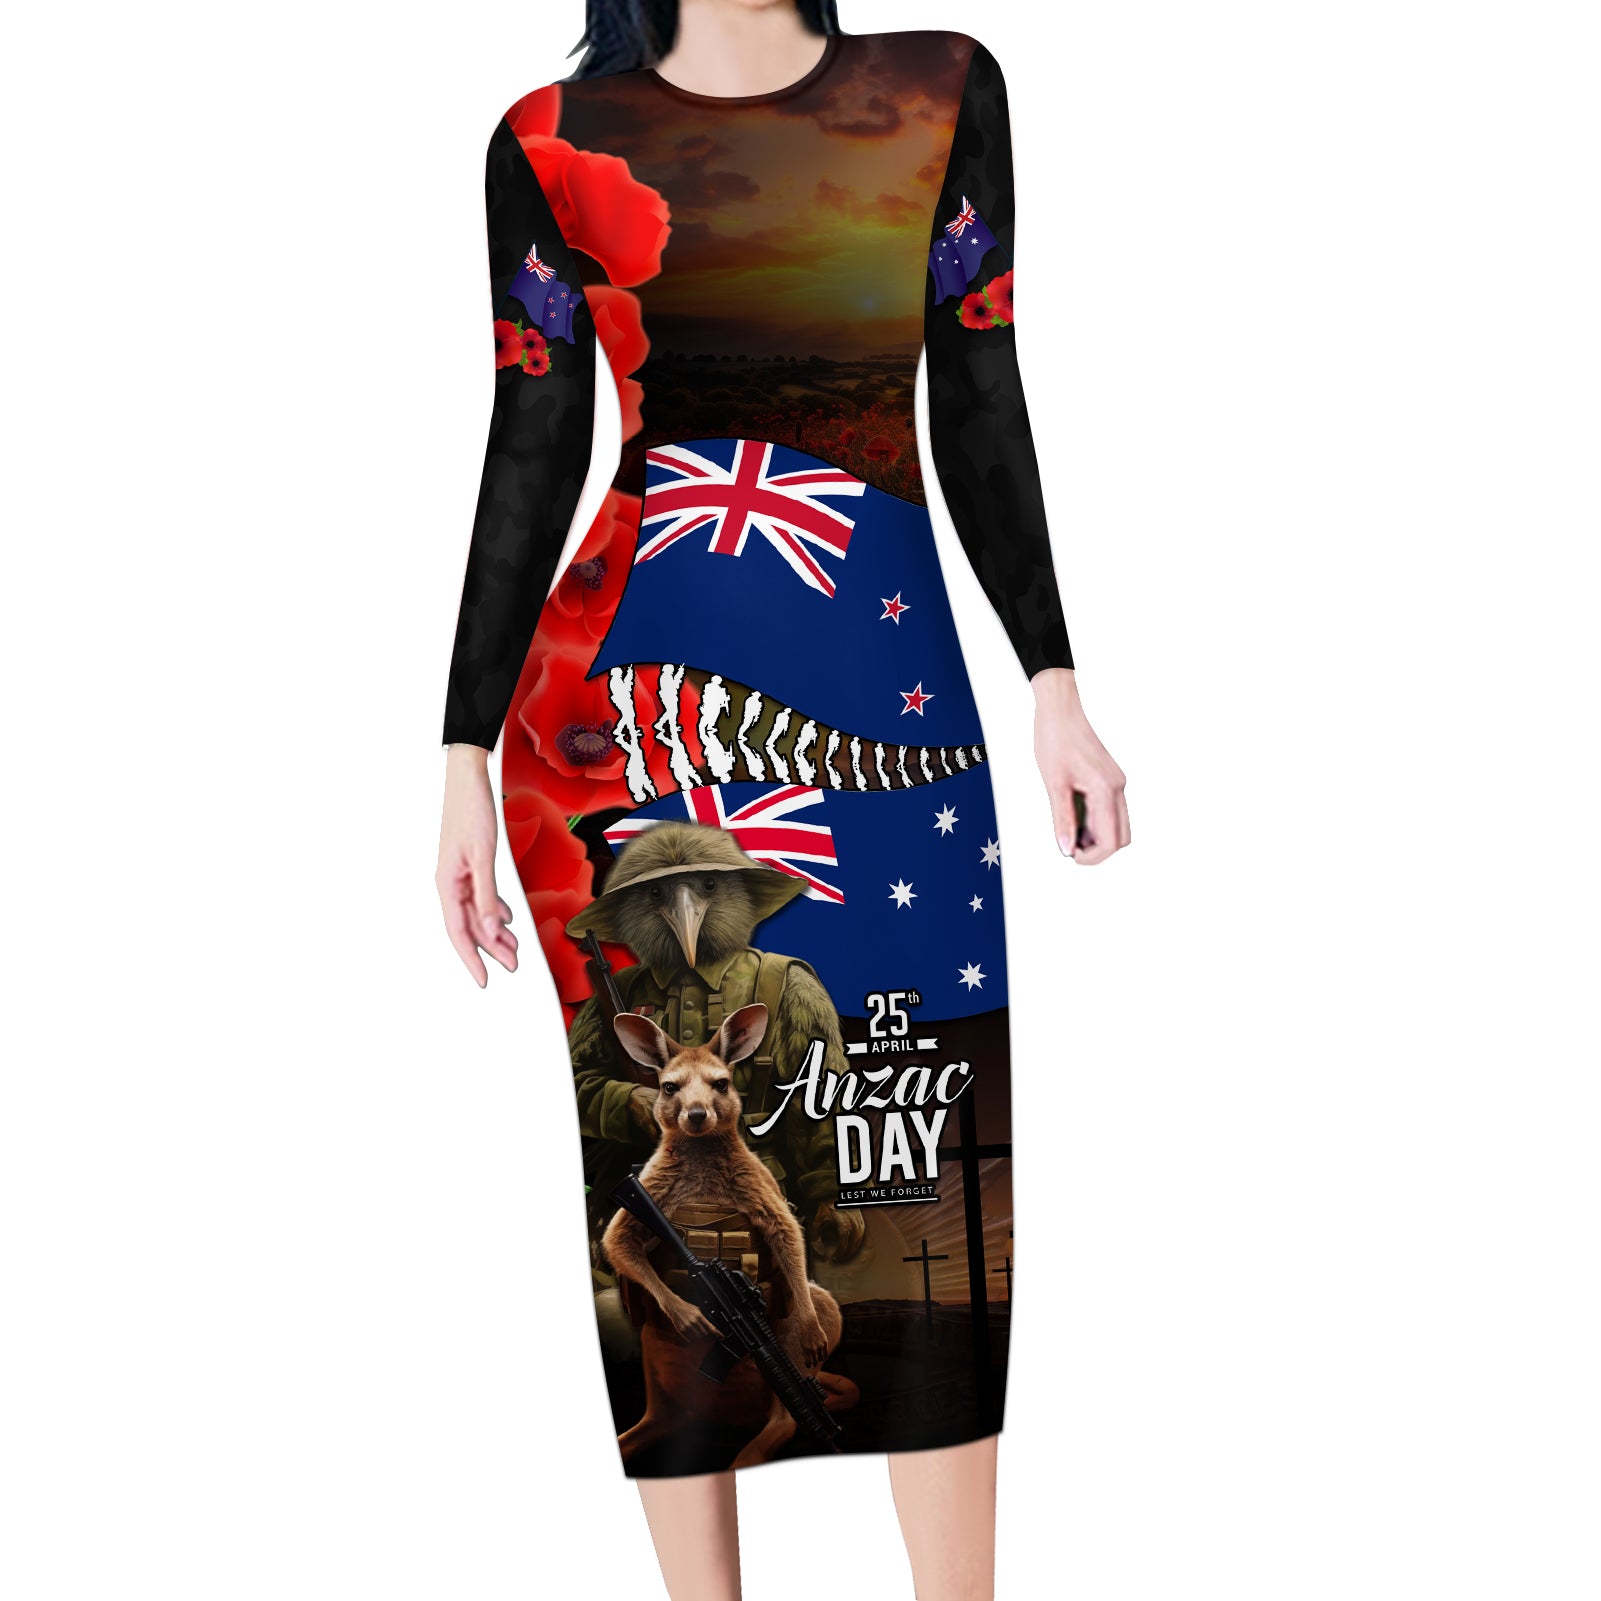 New Zealand and Australia ANZAC Day Long Sleeve Bodycon Dress National Flag mix Kiwi Bird and Kangaroo Soldier Style